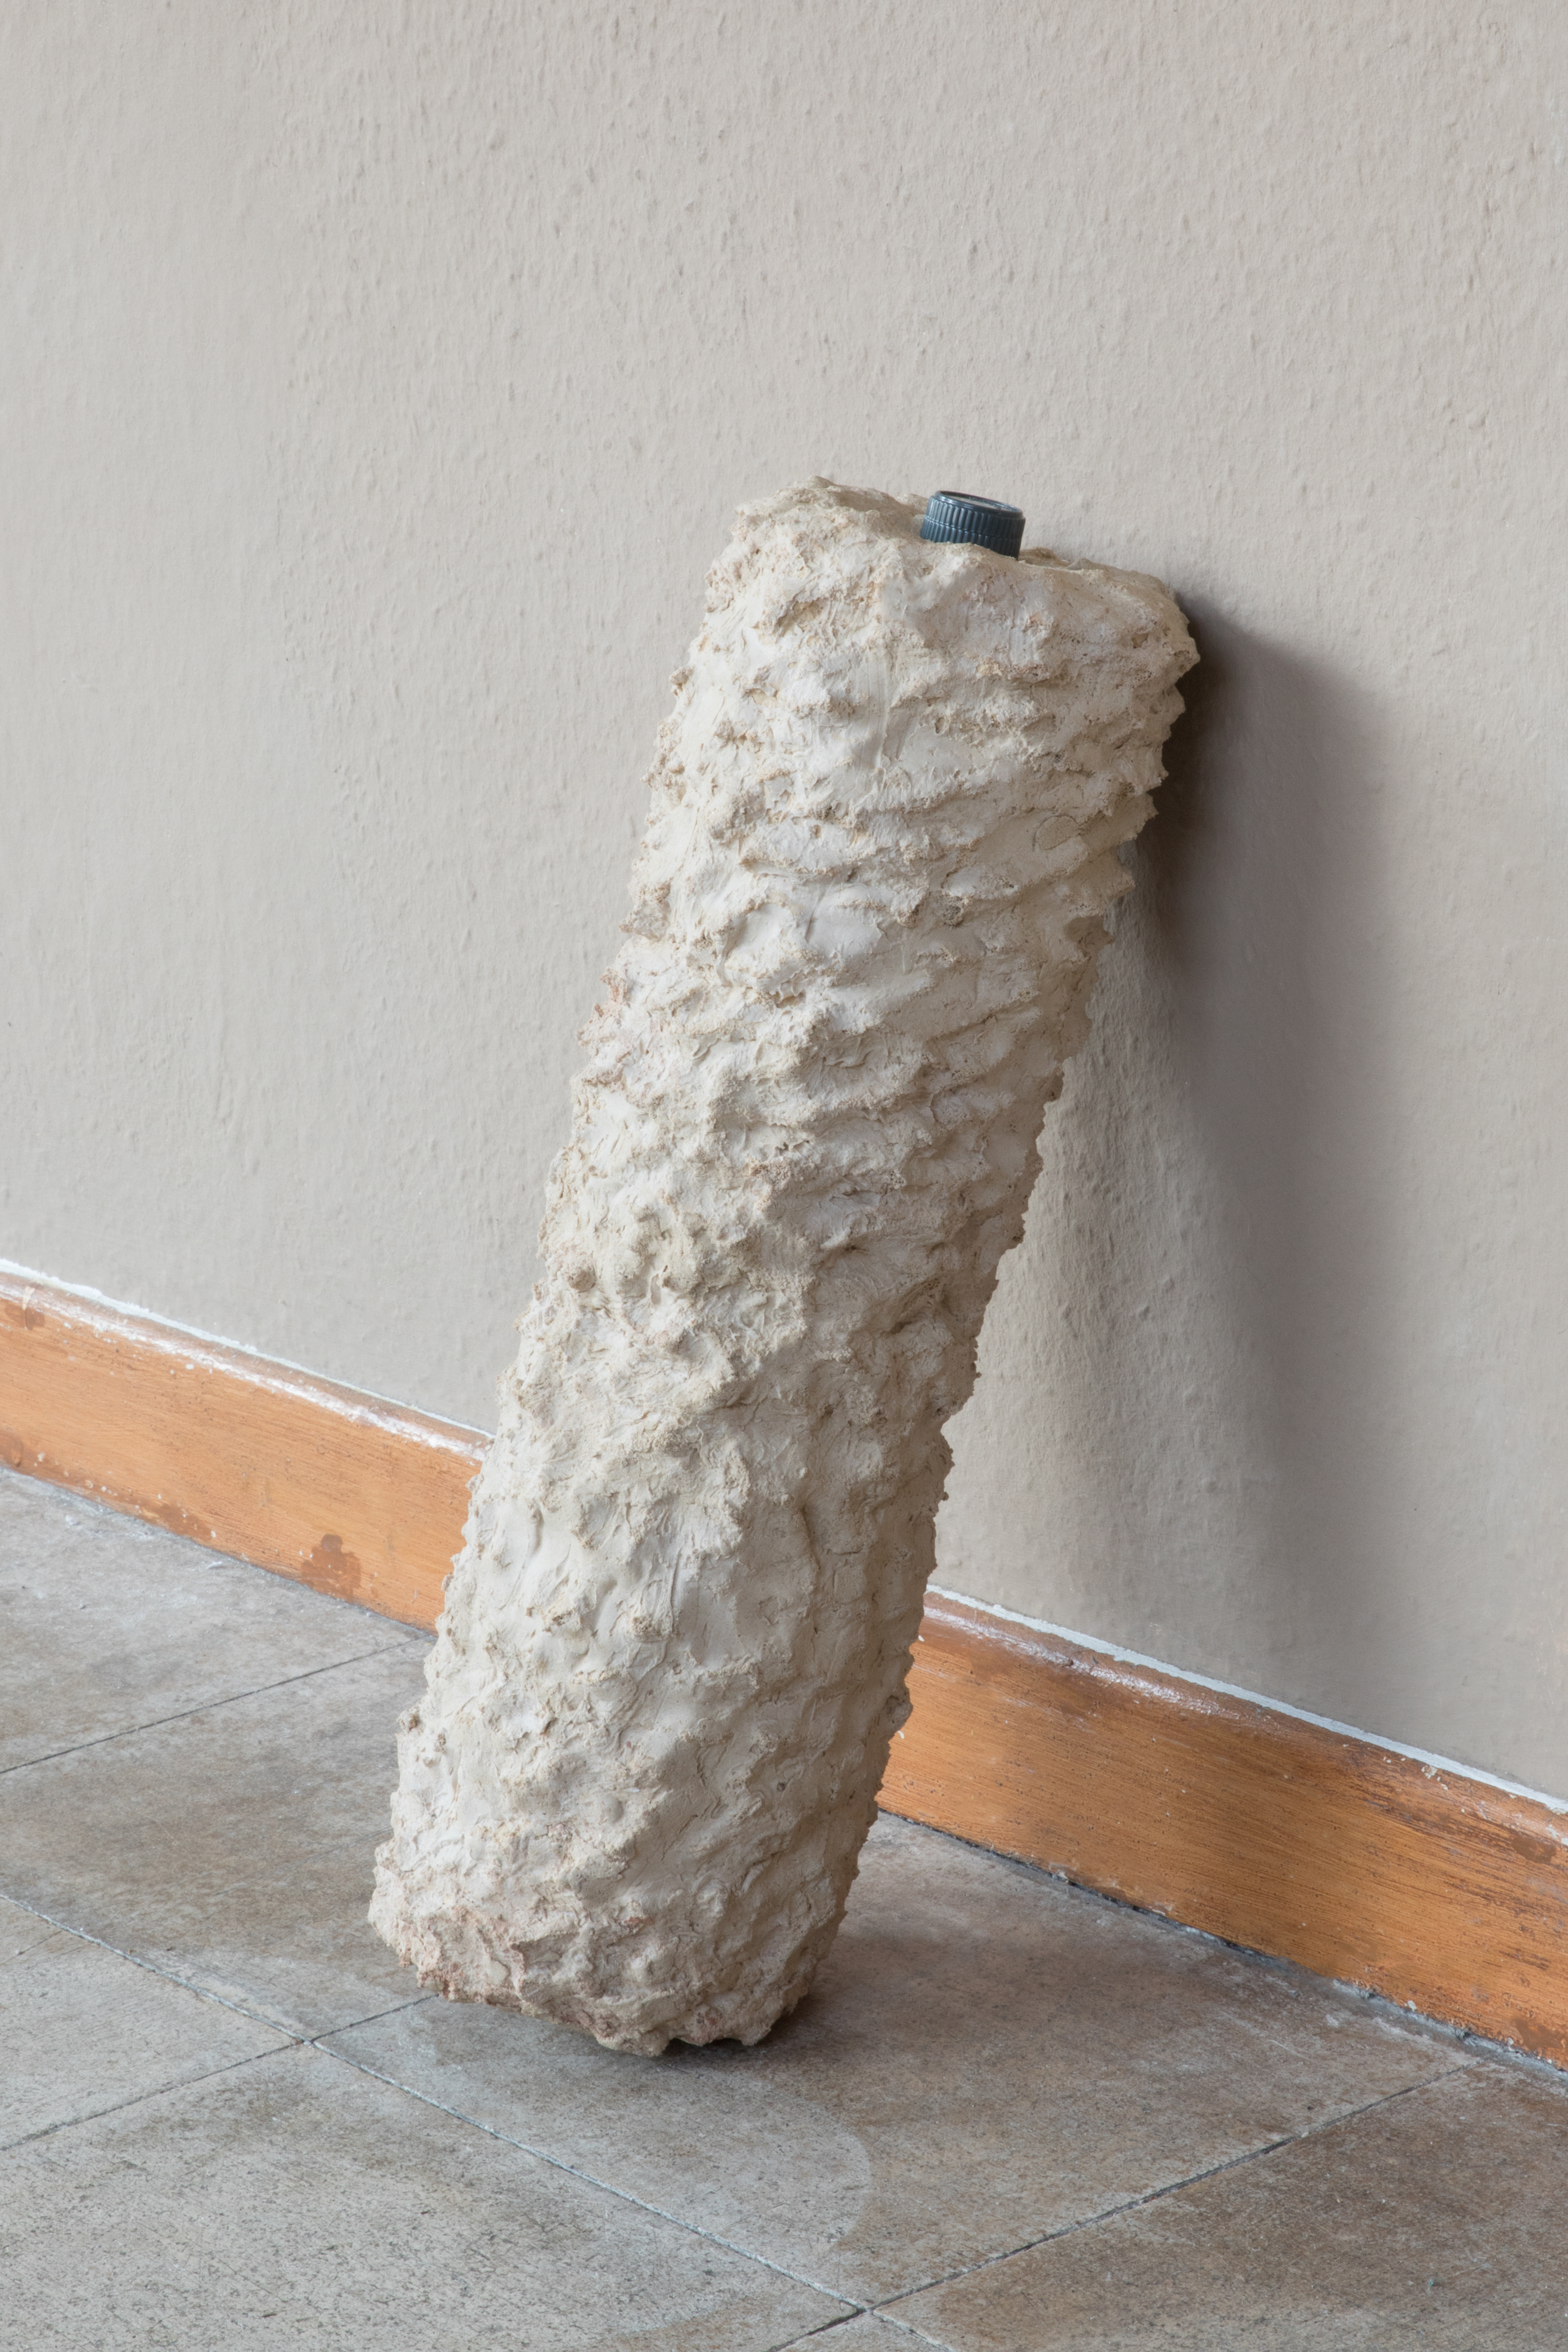 Jannis Zell, *Soft neck Role Mathy*, Polyurethan foam, silicon, sandstone powder, vibrator, 43×14×14cm